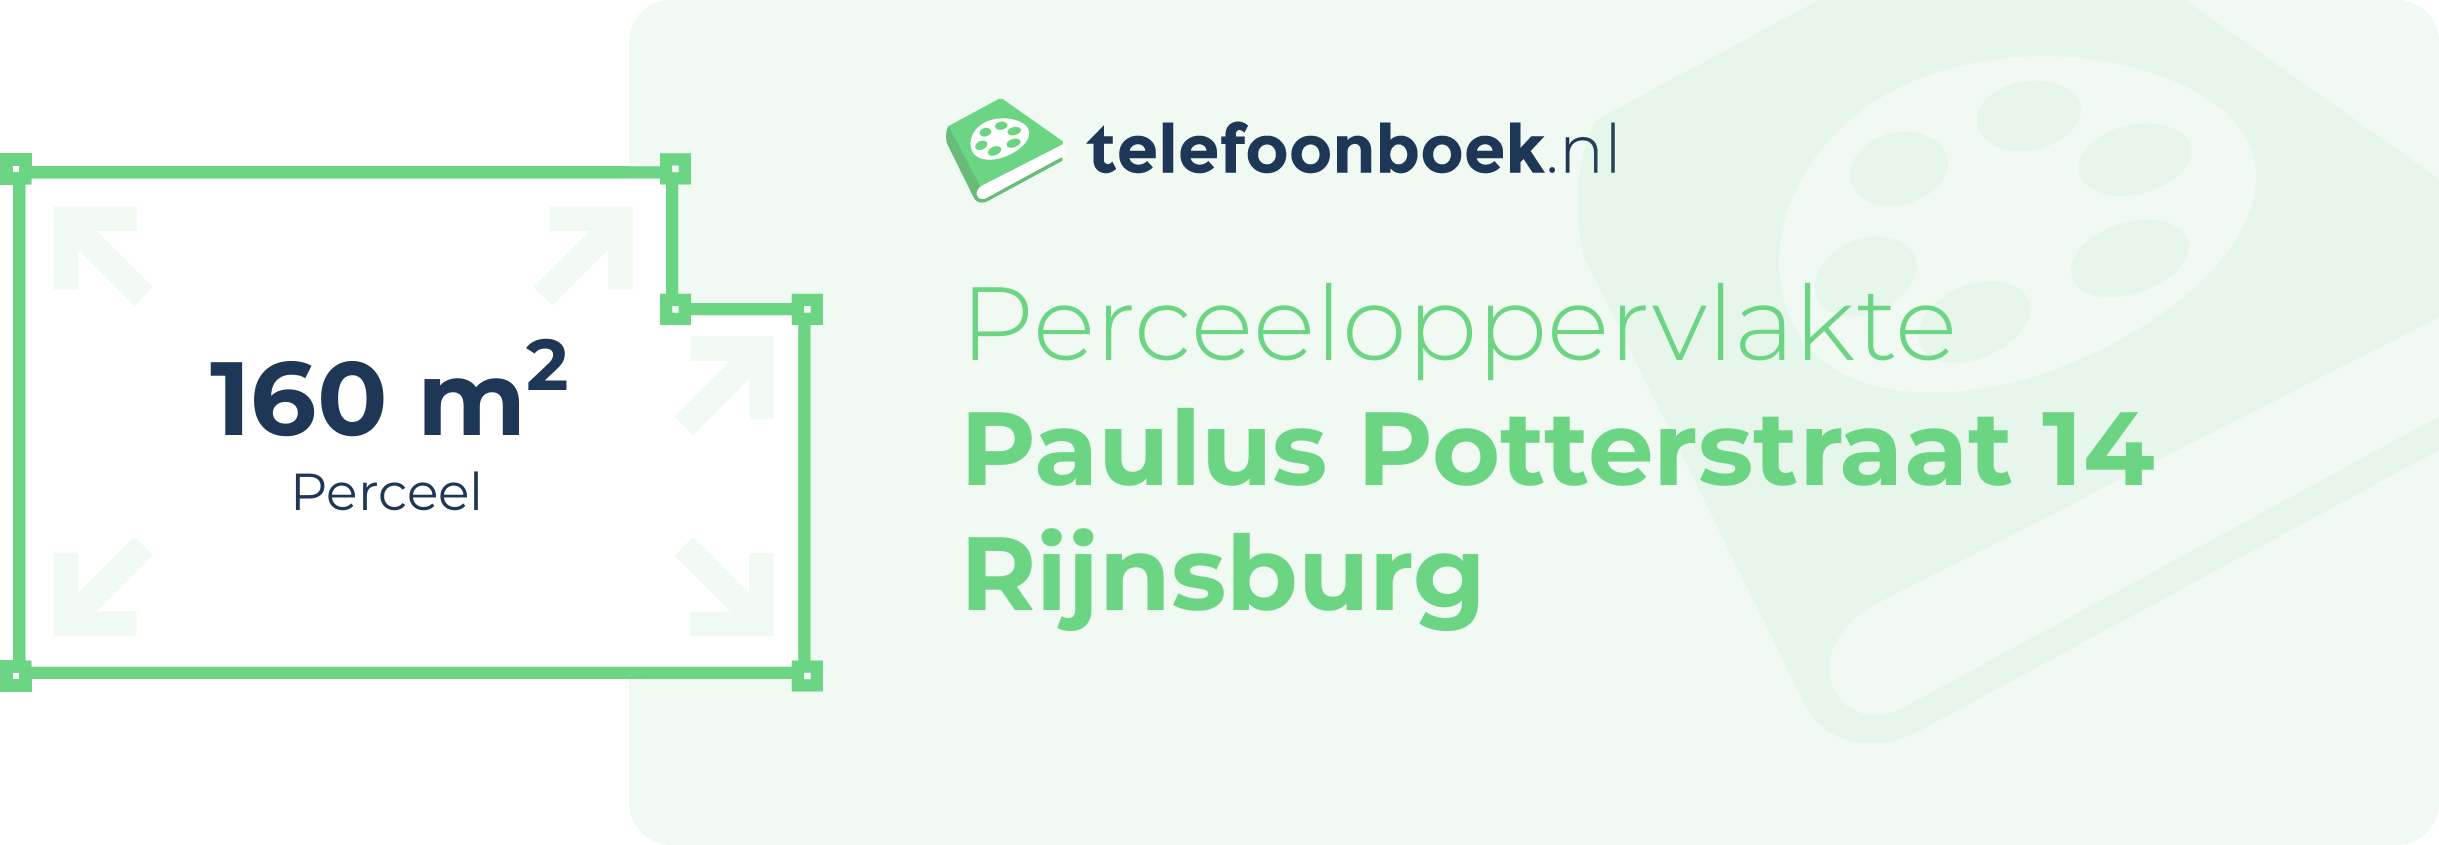 Perceeloppervlakte Paulus Potterstraat 14 Rijnsburg